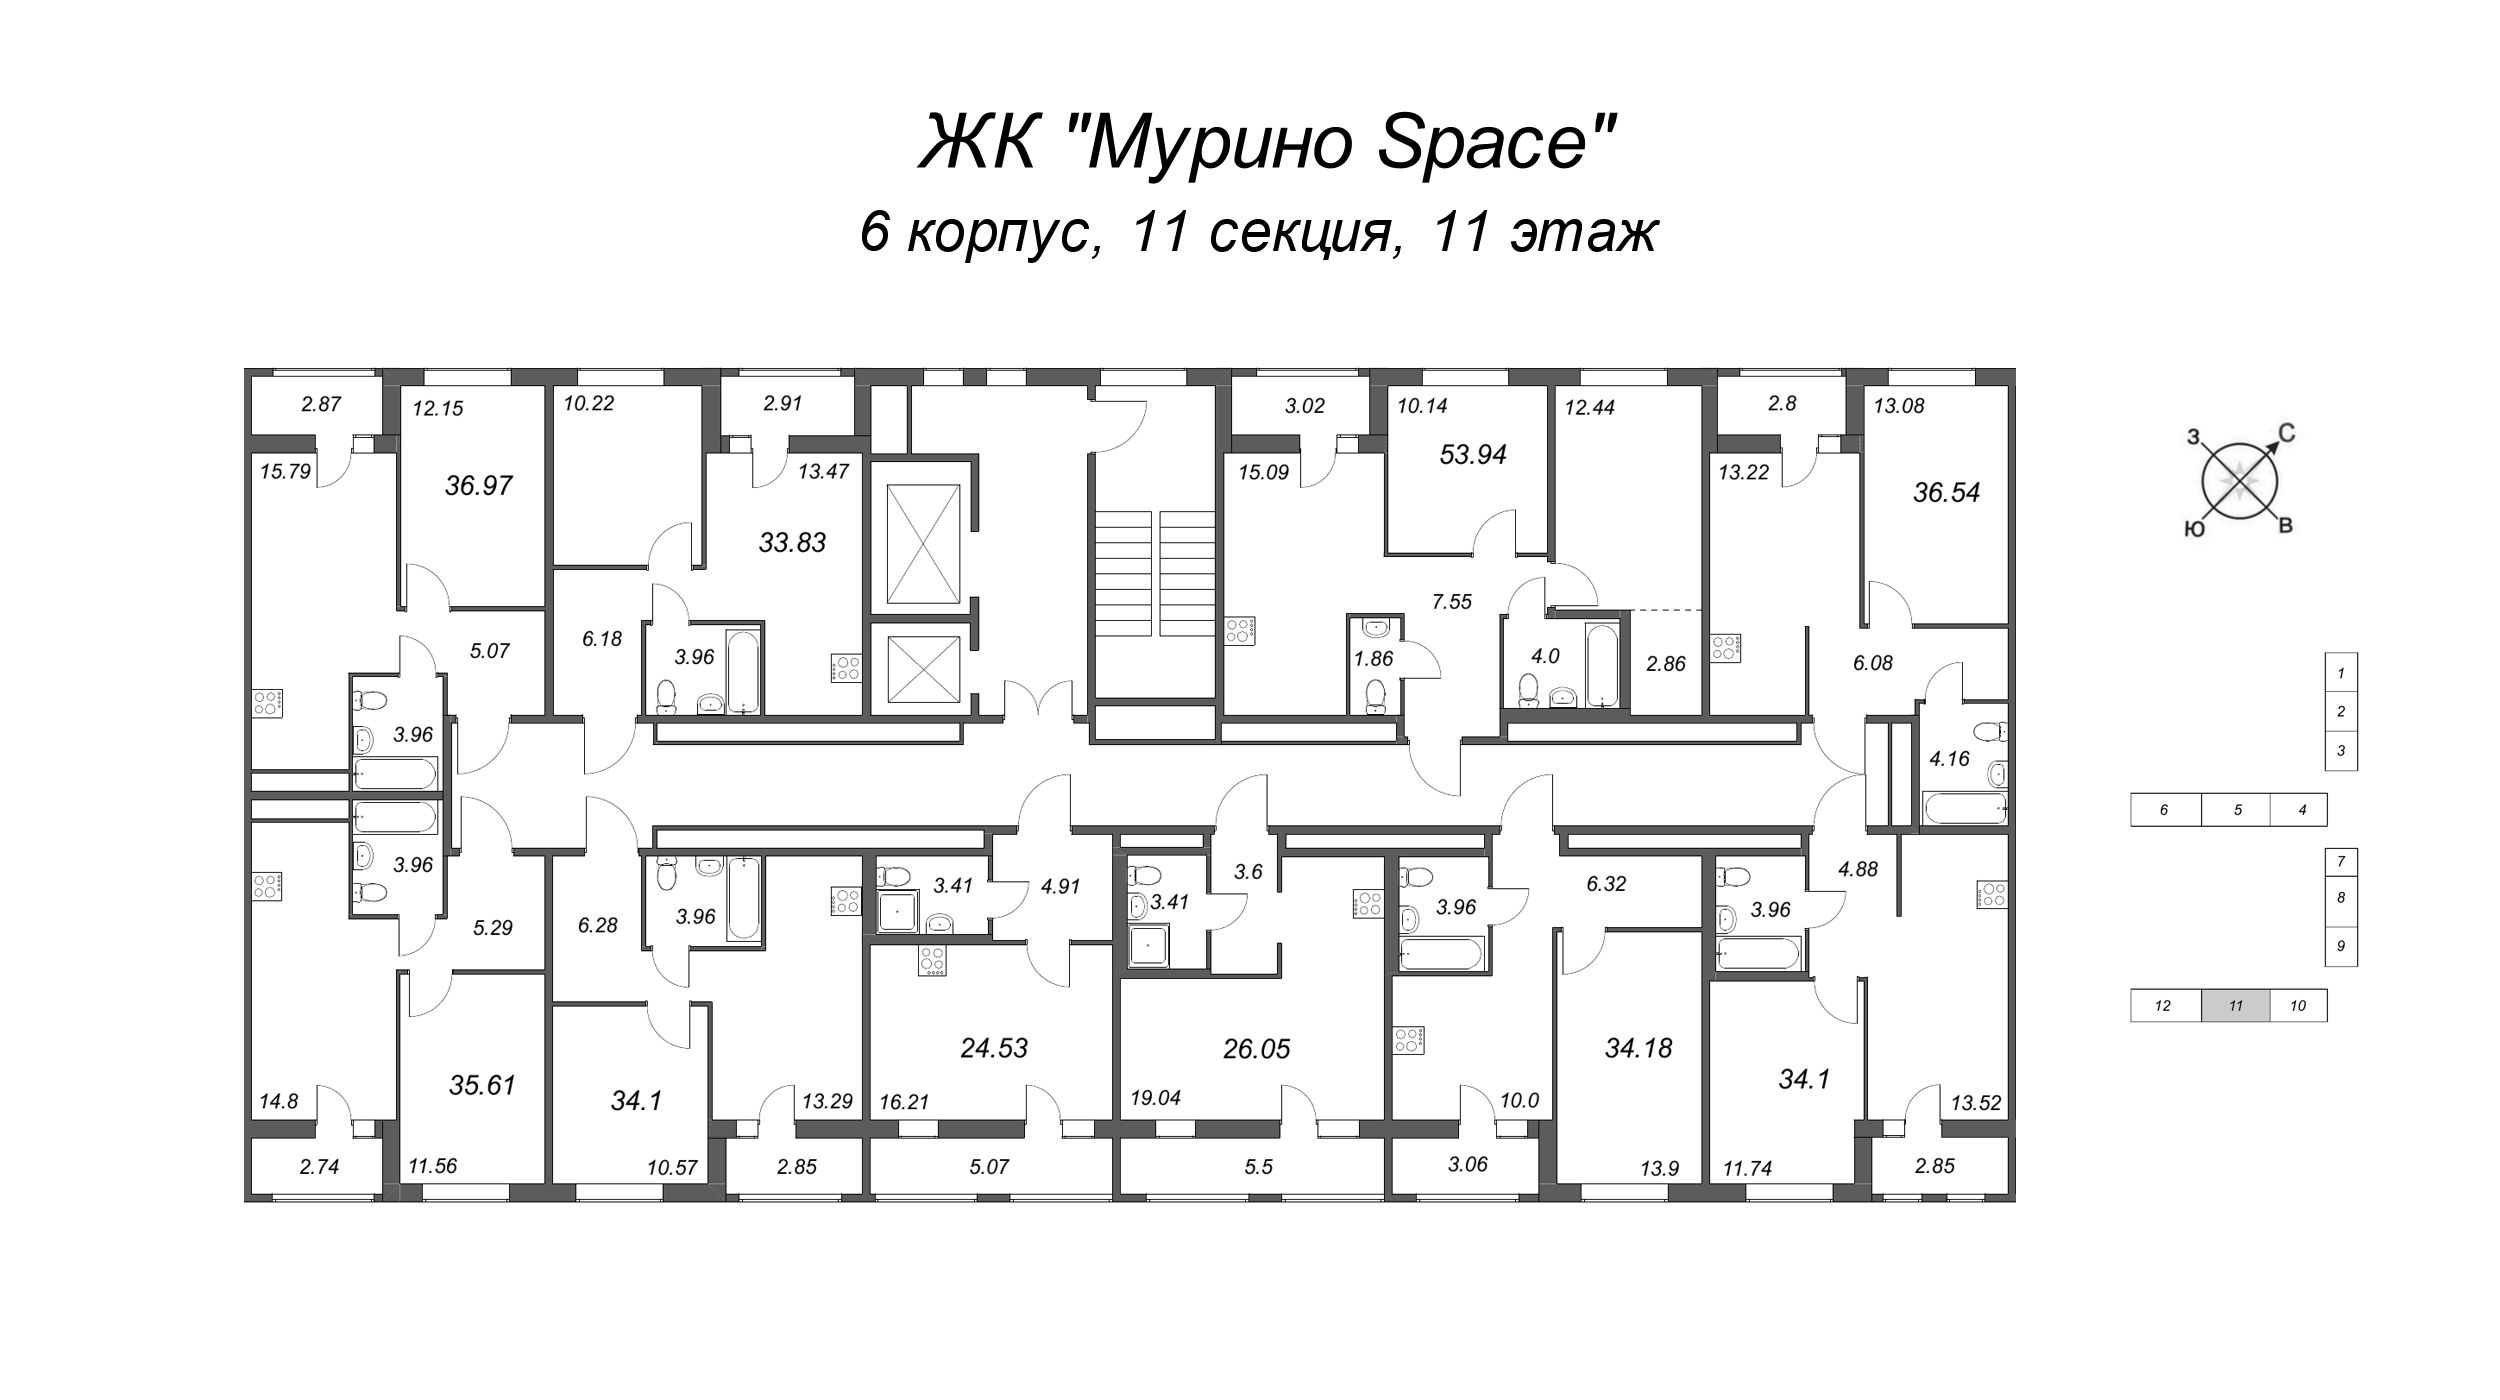 3-комнатная (Евро) квартира, 53.94 м² в ЖК "Мурино Space" - планировка этажа